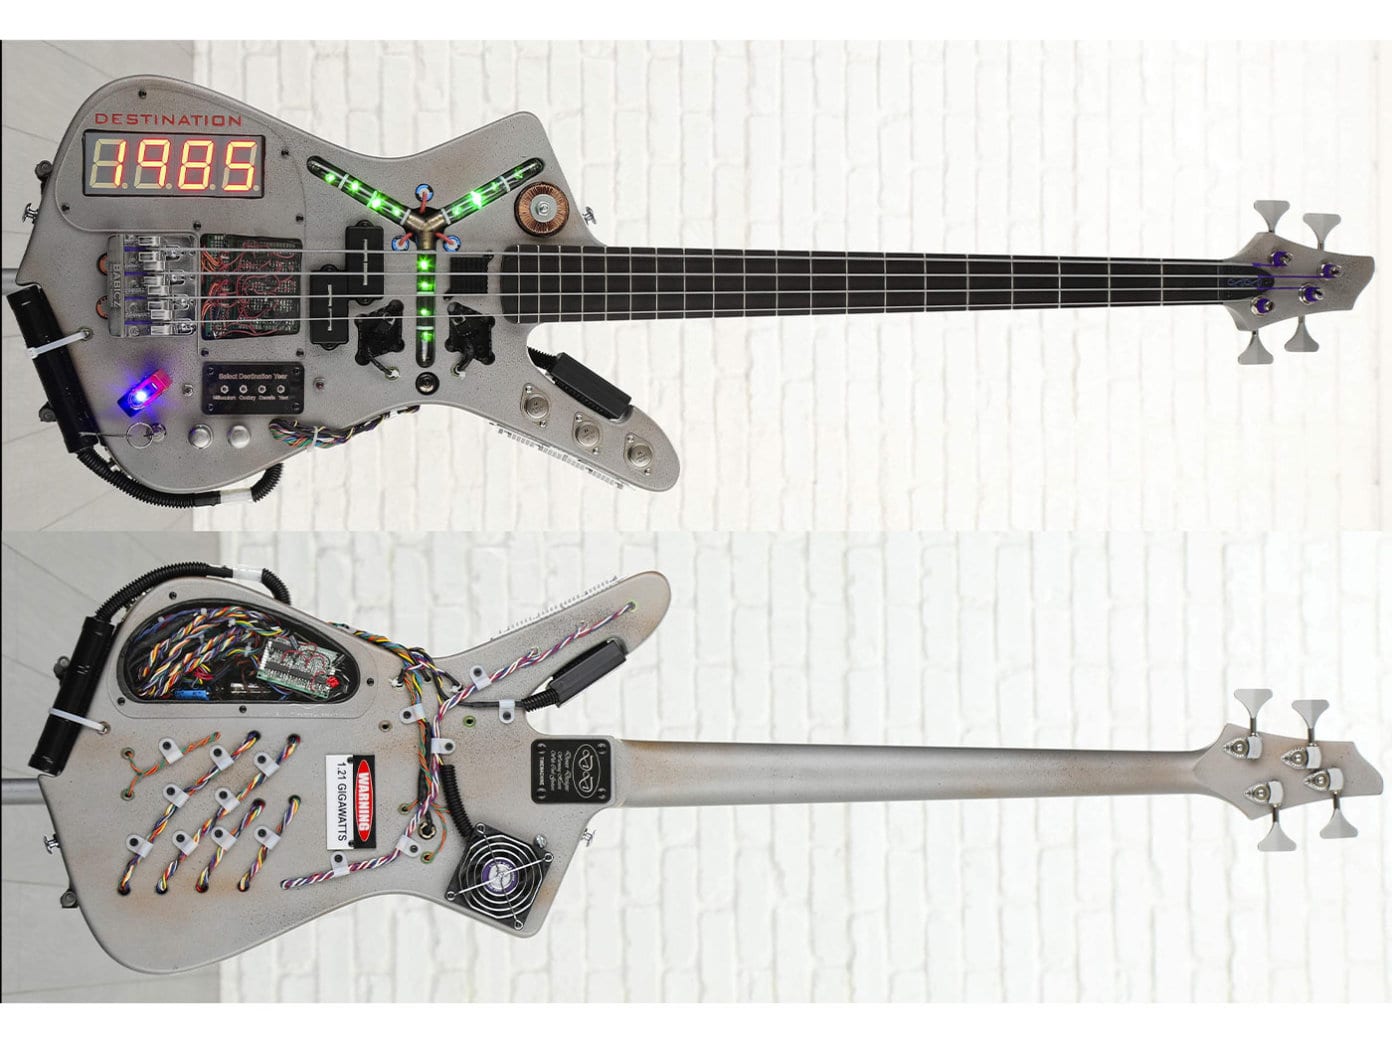 DeLorean/Time Machine bass guitar  built by Doner Designs